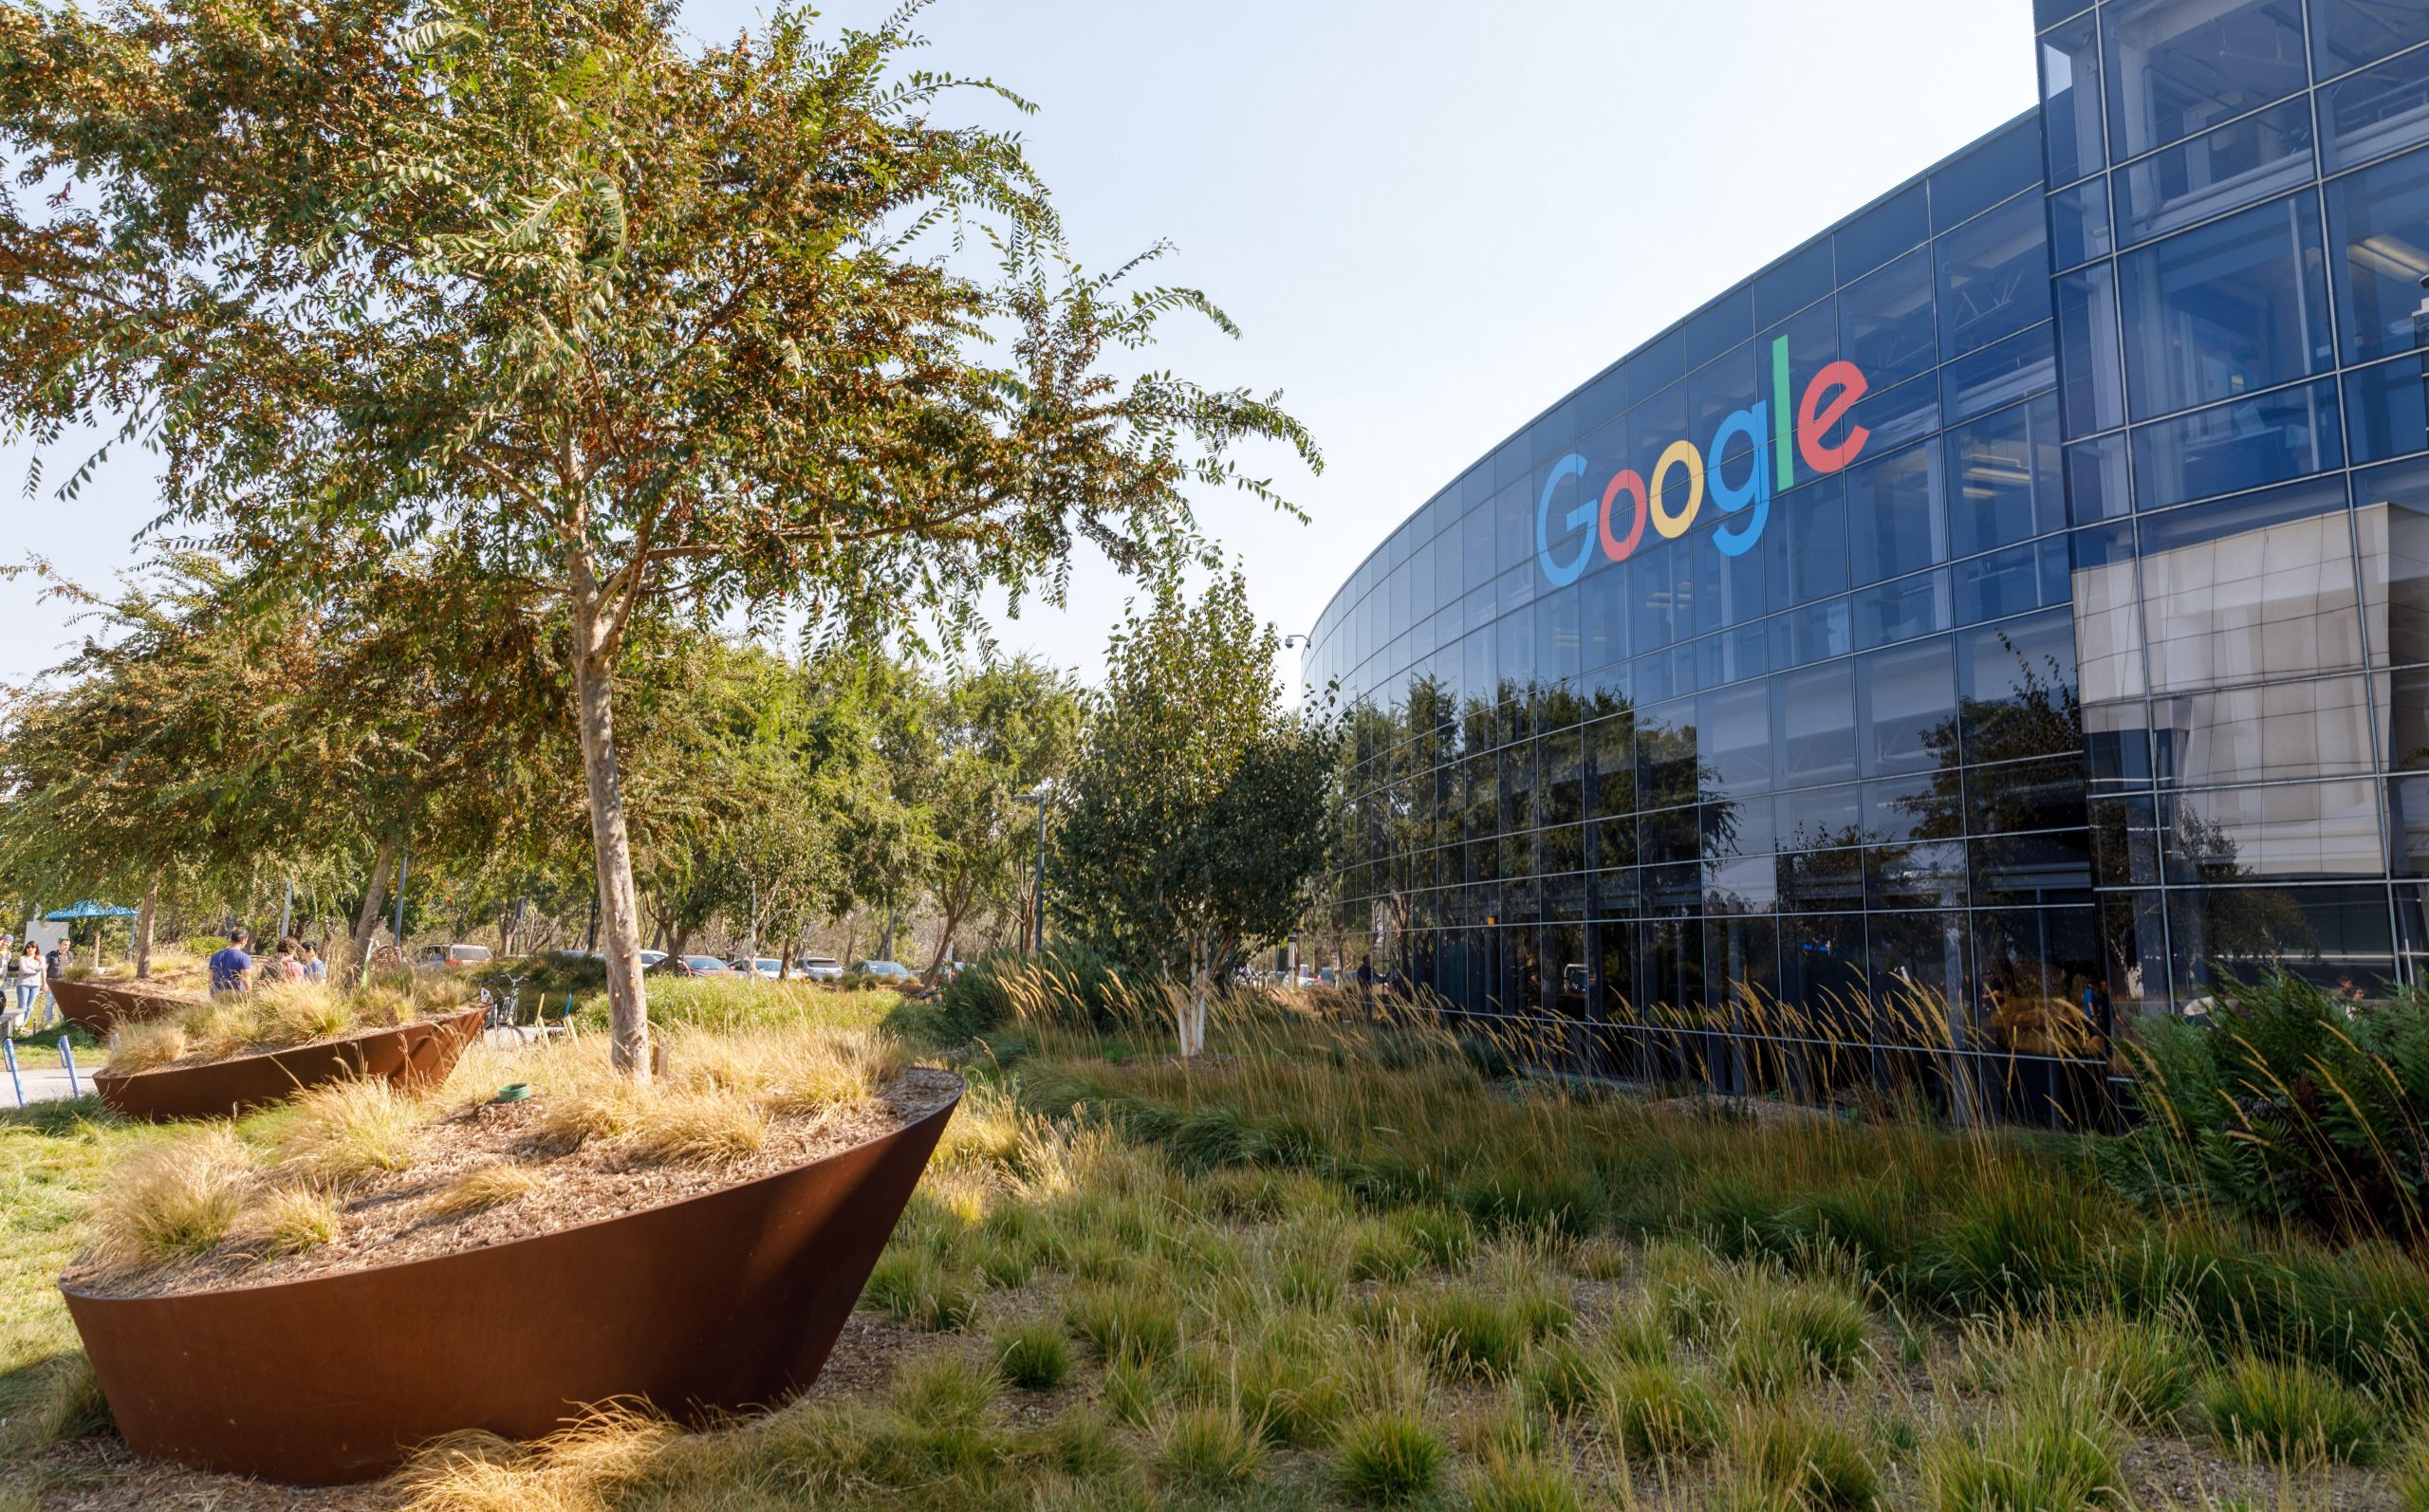 Google reportedly scored tax breaks using secret shell companies